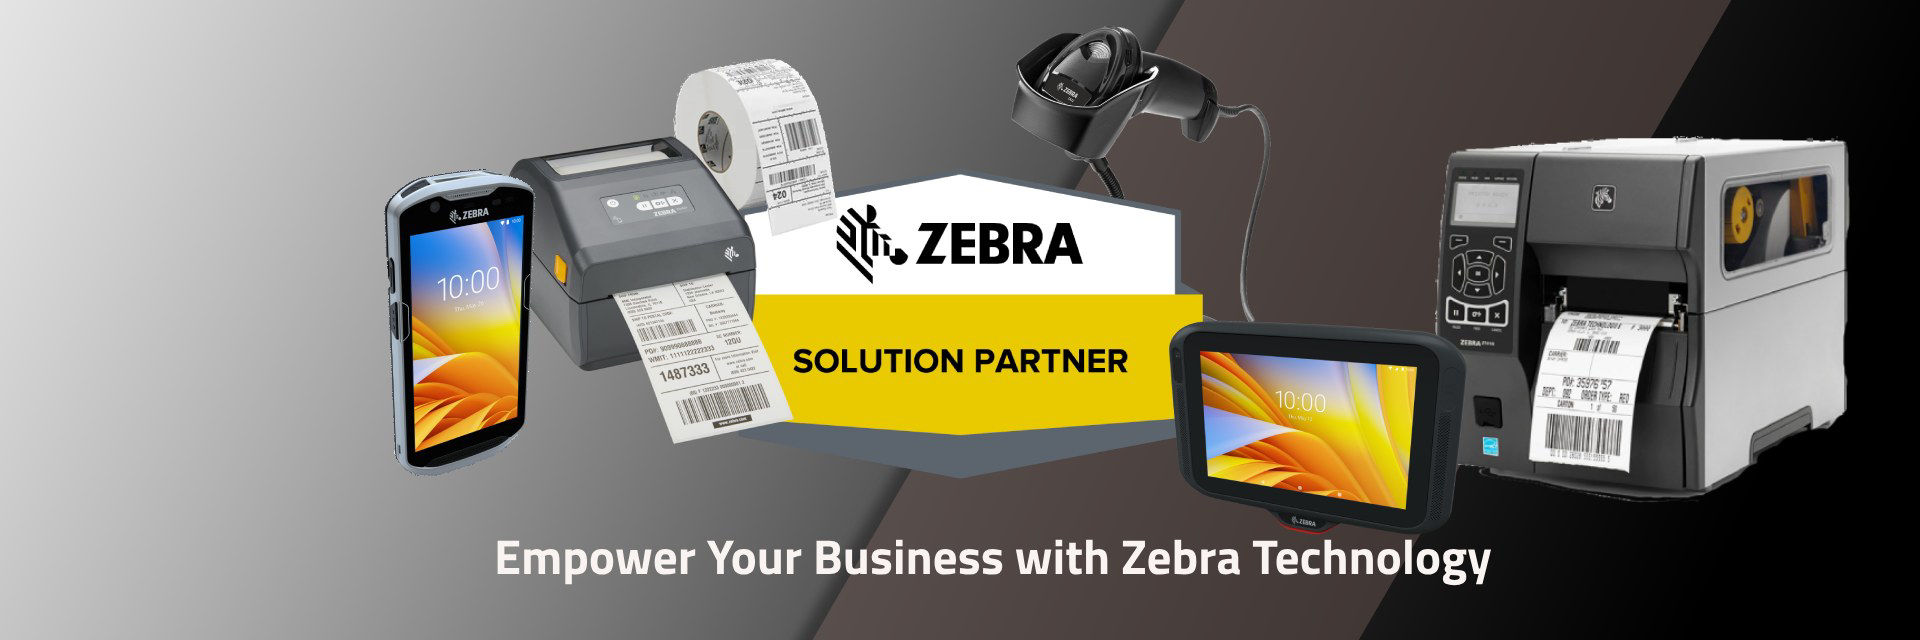 iLabMalta - Zebra Solution Partners